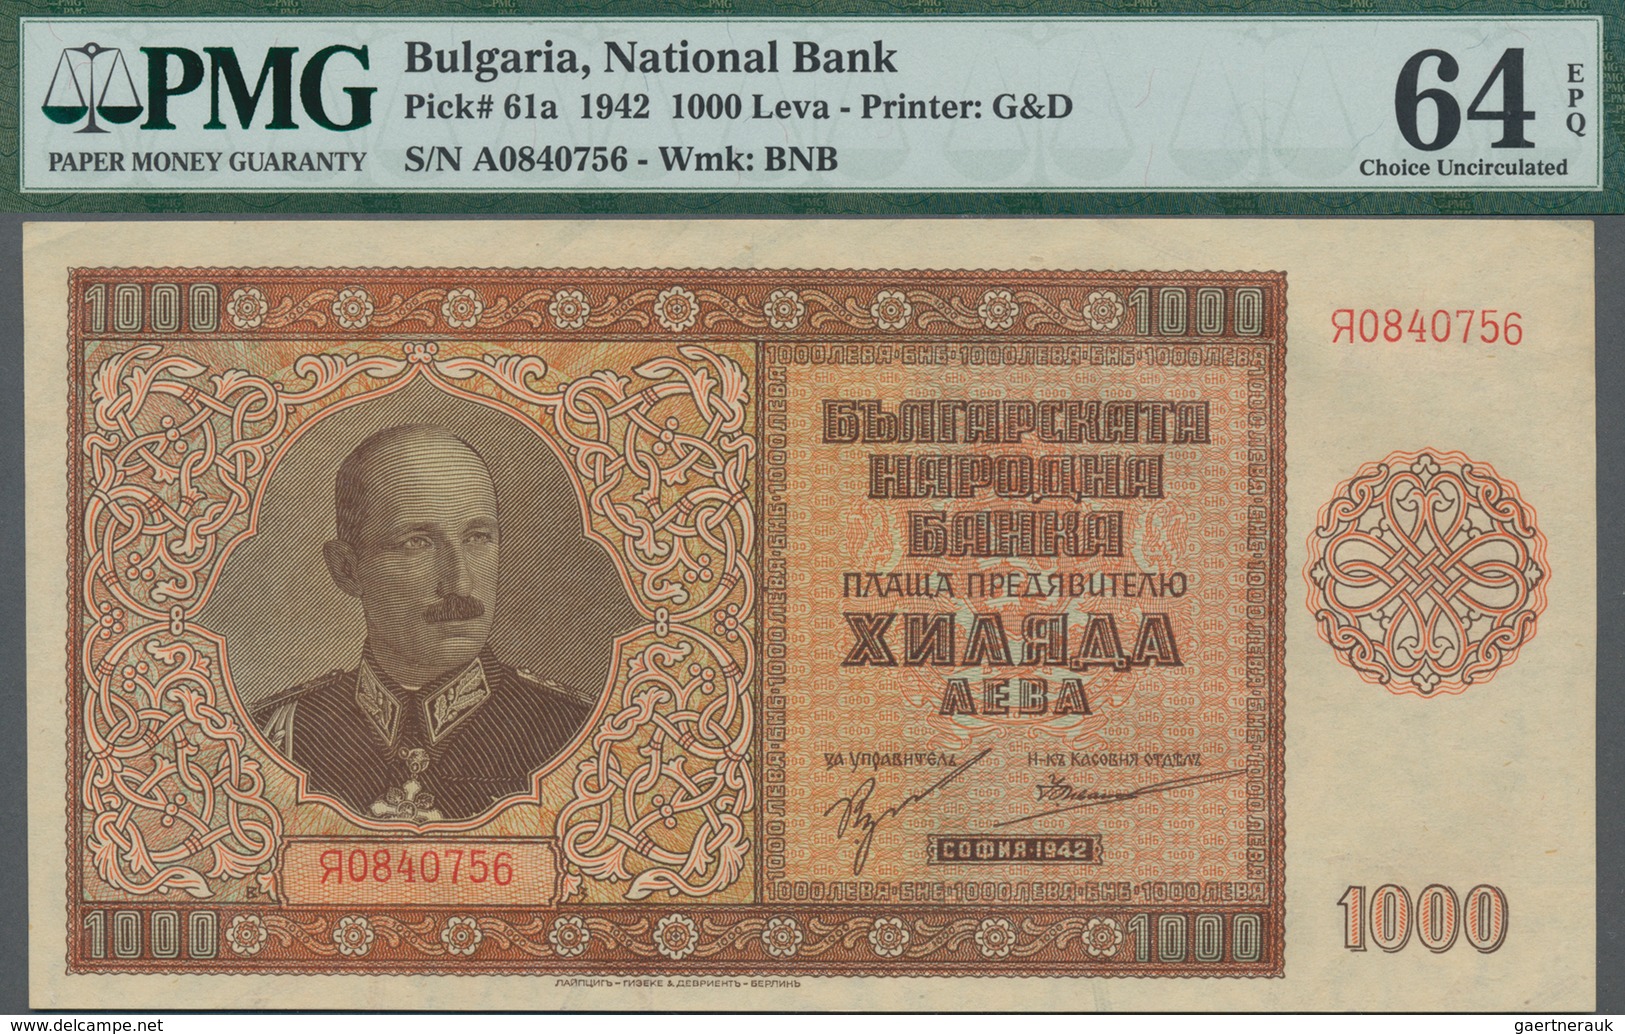 Bulgaria / Bulgarien: National Bank Of Bulgaria 1000 Leva 1942, P.61a, PMG Graded 64 Choice Uncircul - Bulgaria